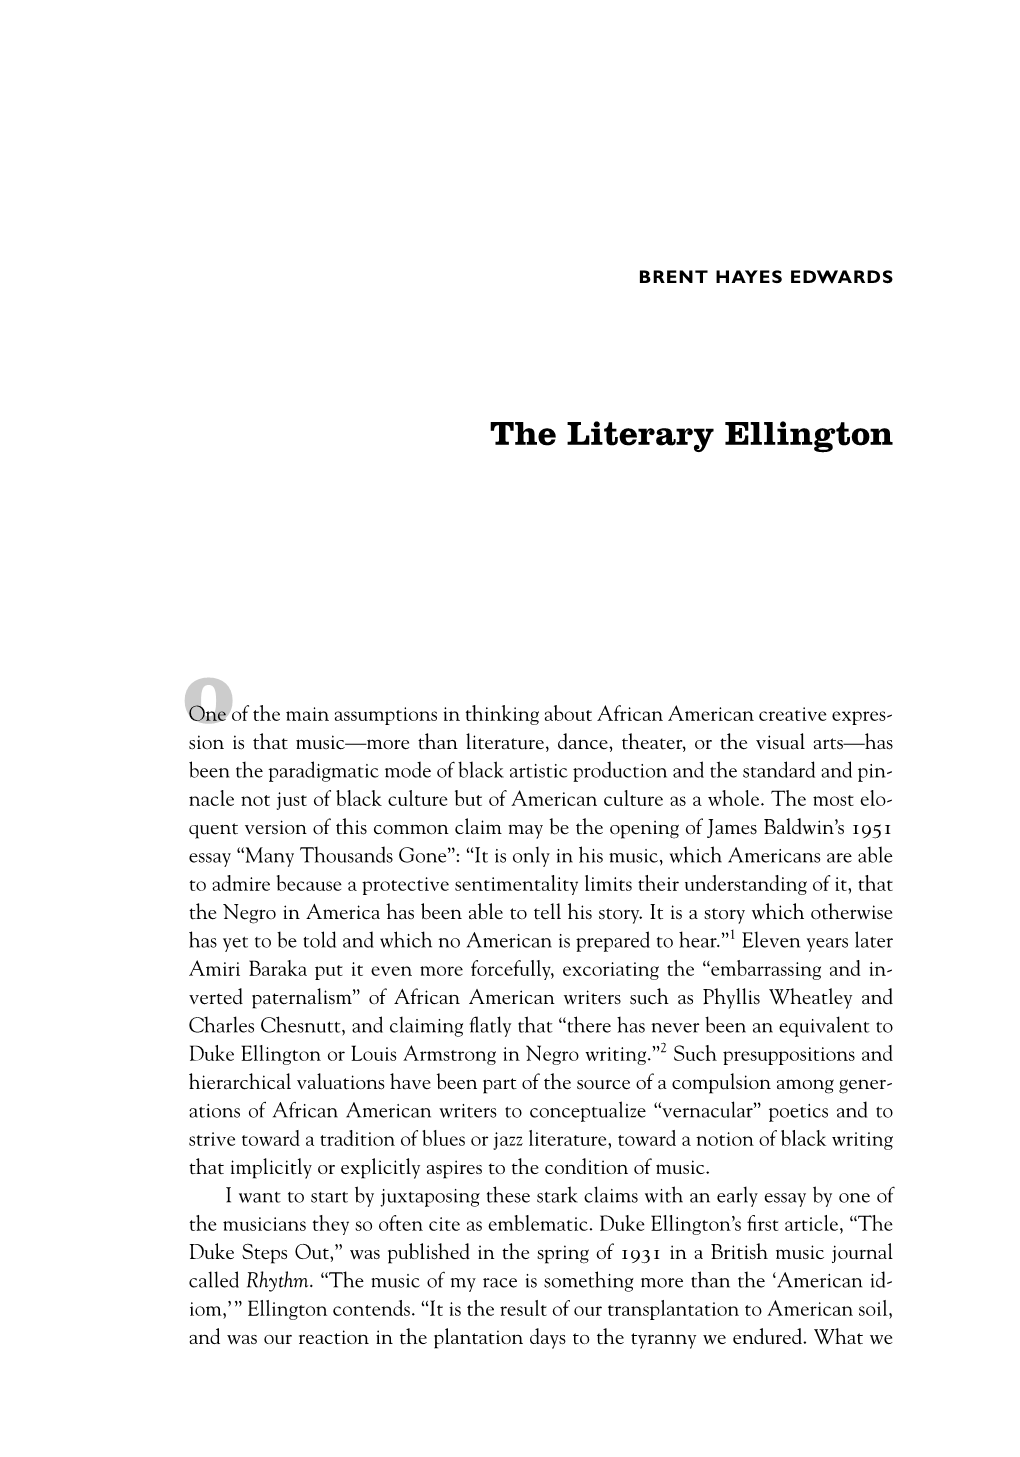 The Literary Ellington